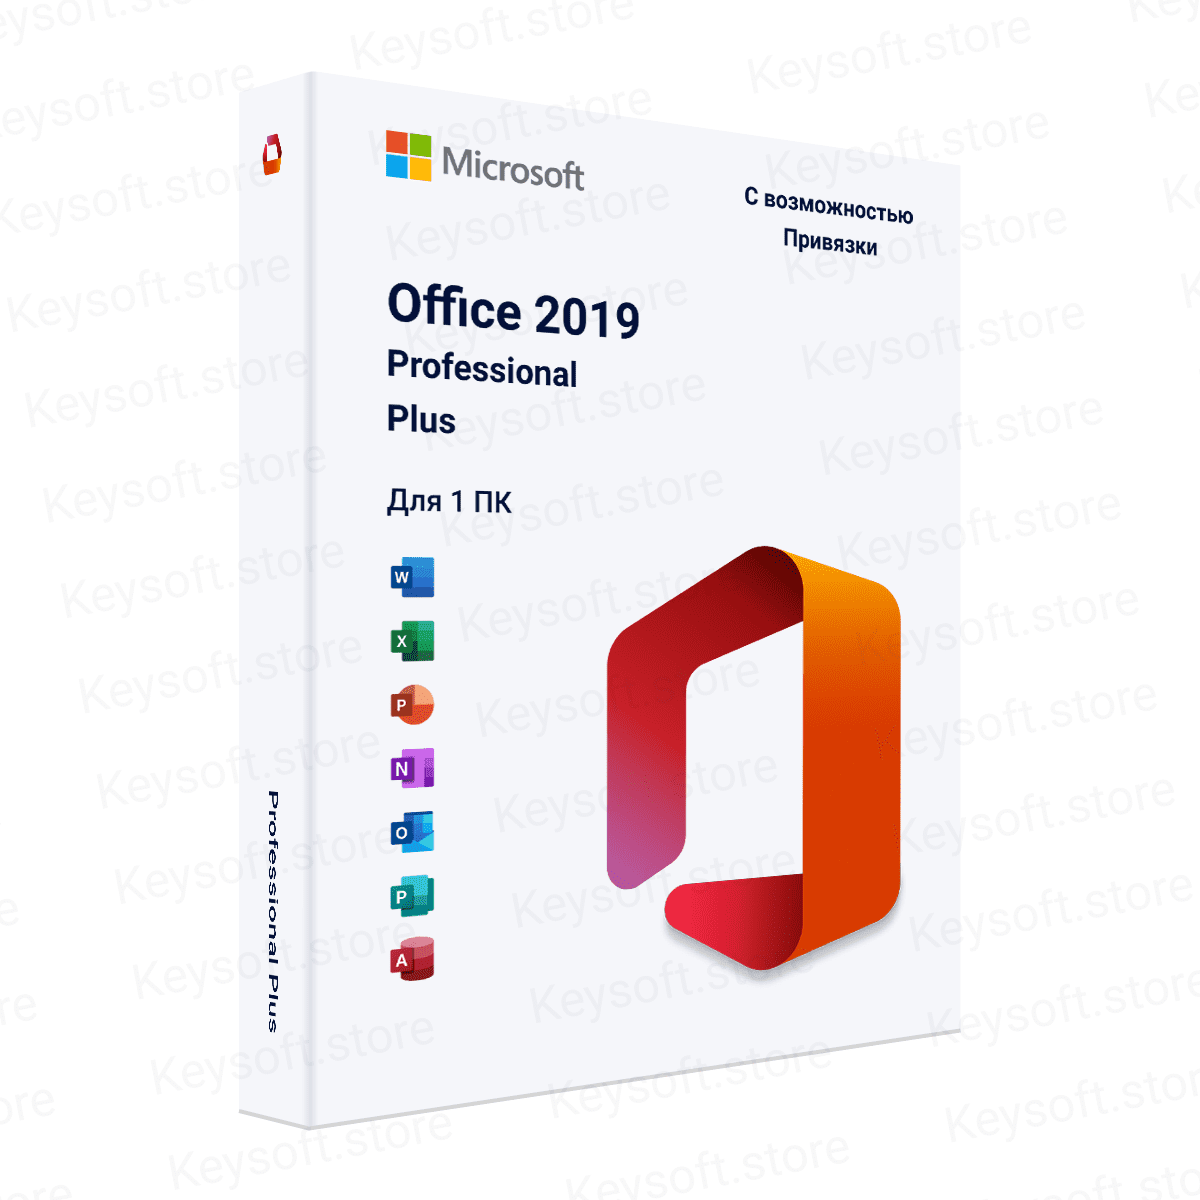 Office 2019 Professional Plus (С возможностью привязки)